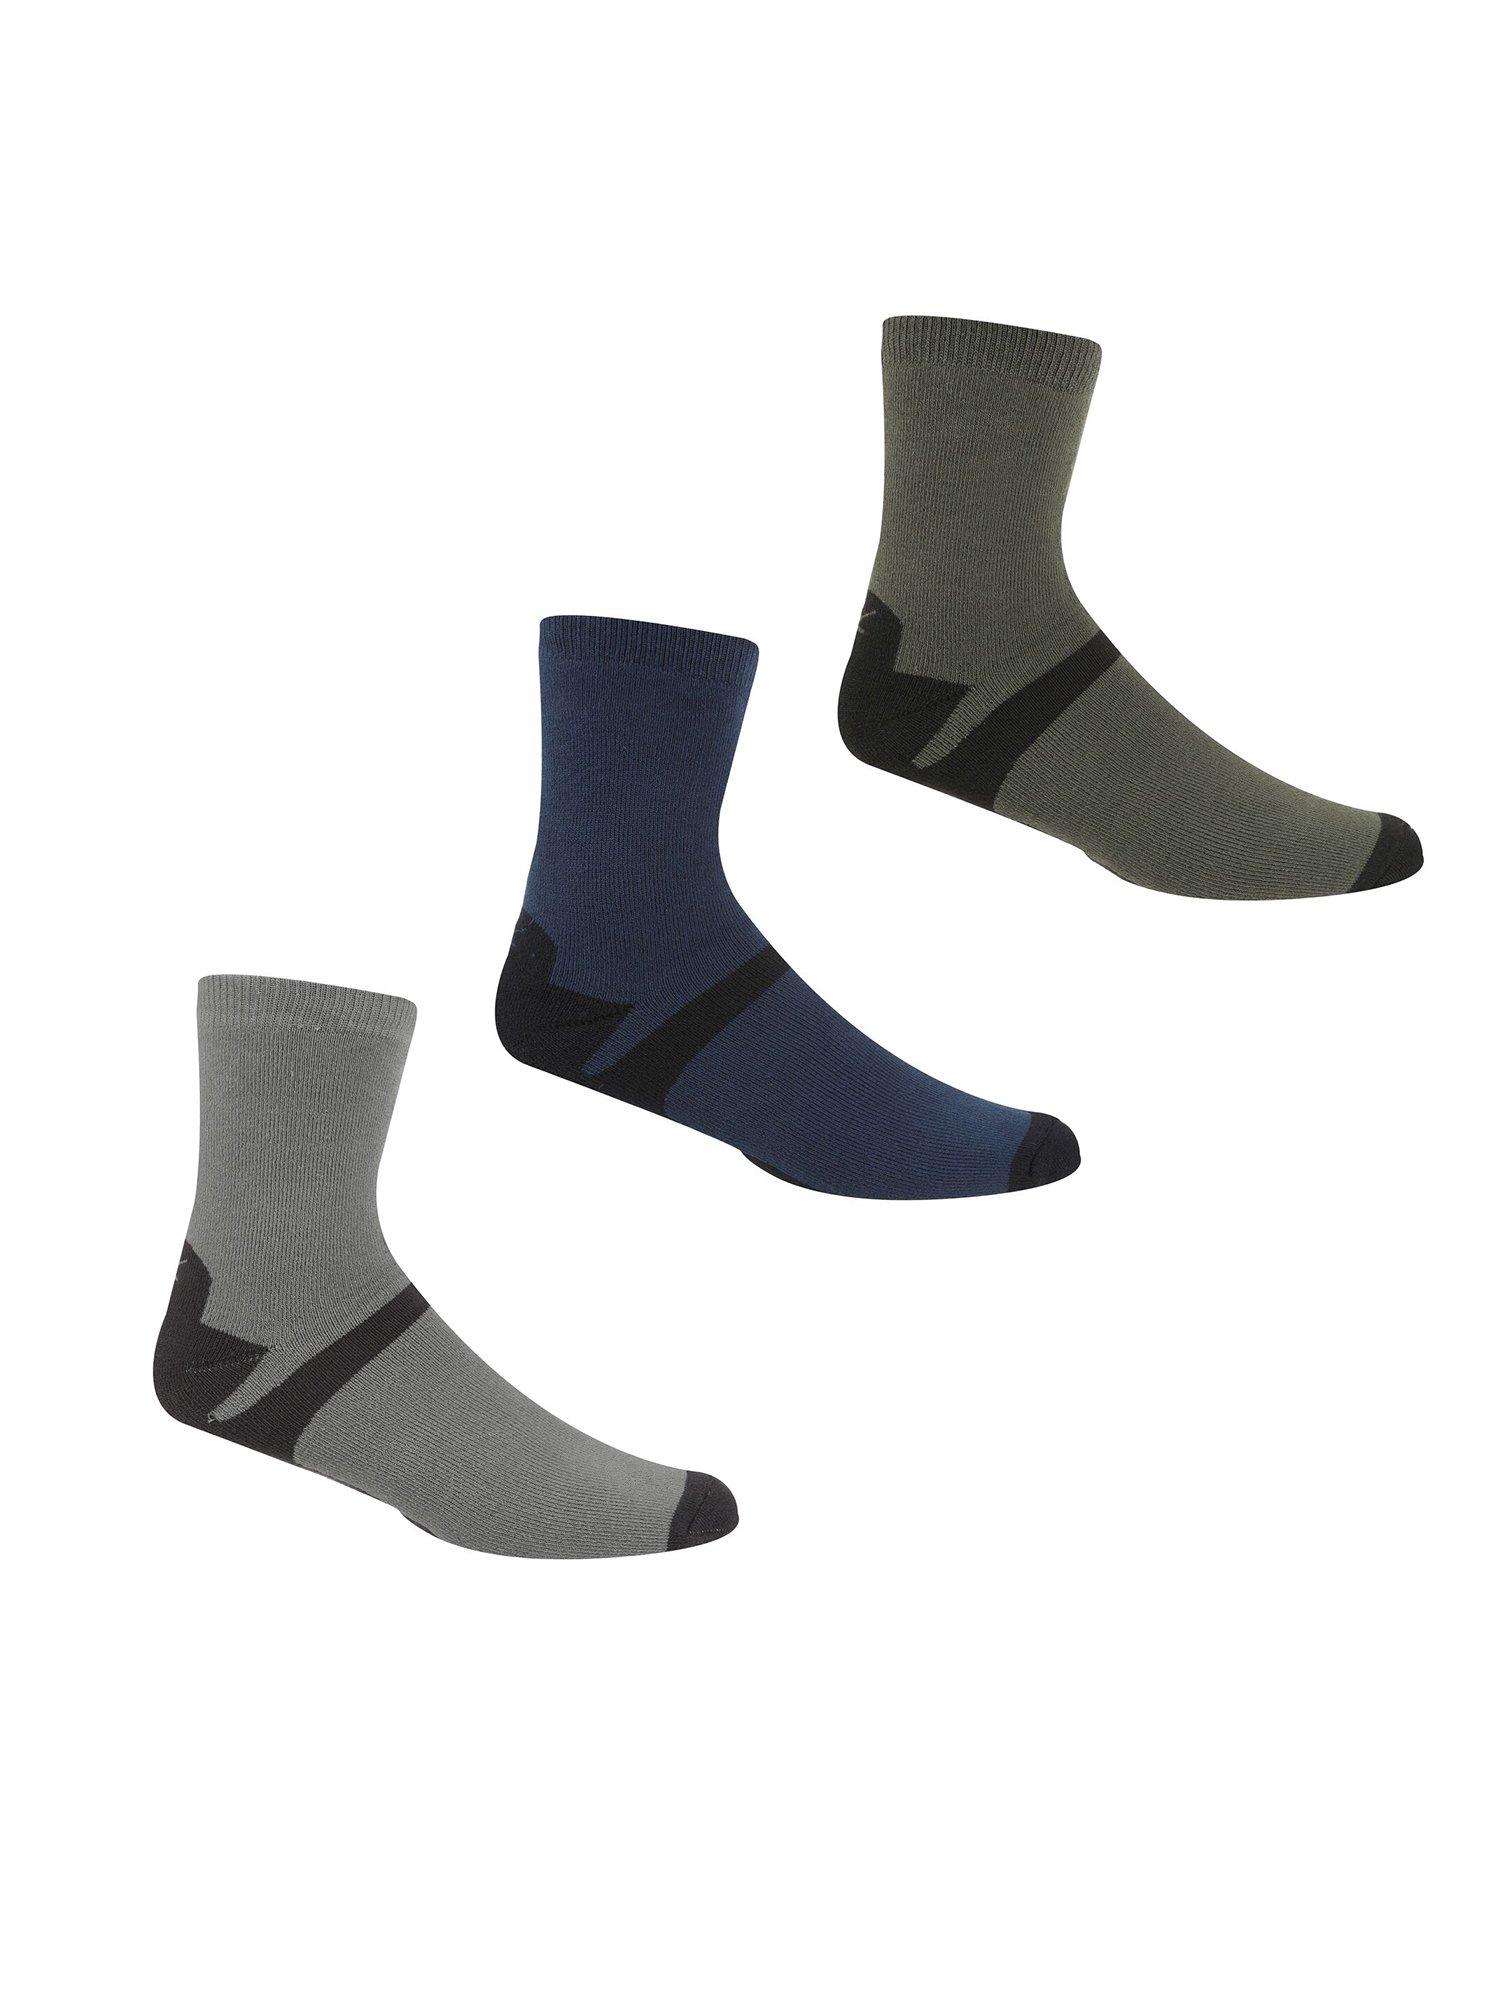 'Outdoor Lifestyle' Coolmax 3 Pair Socks